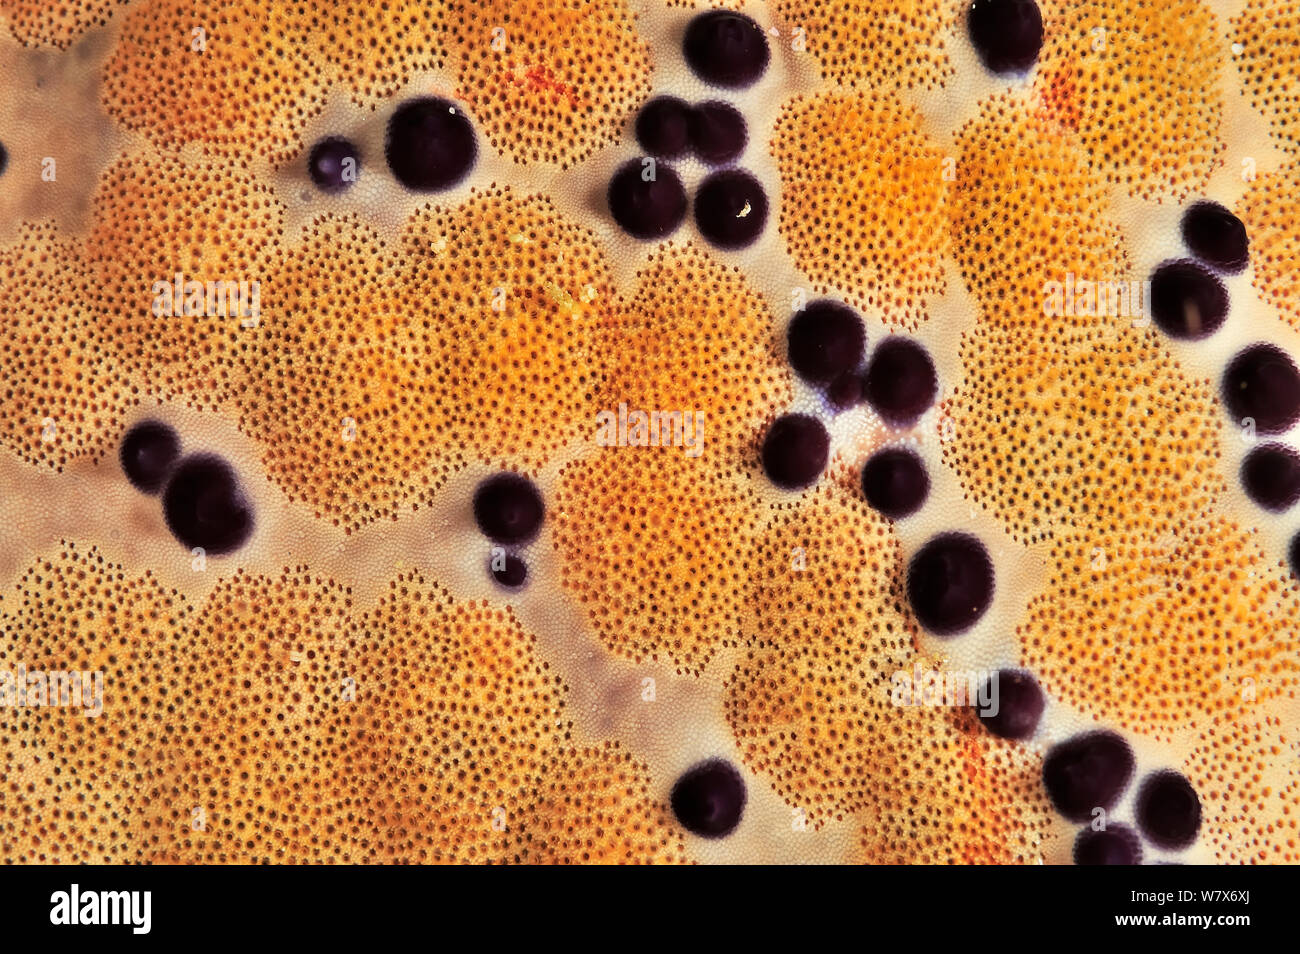 Indian cushion sea star (Culcita schmideliana) close up, coast of Dhofar and Hallaniyat islands, Oman. Arabian Sea. Stock Photo